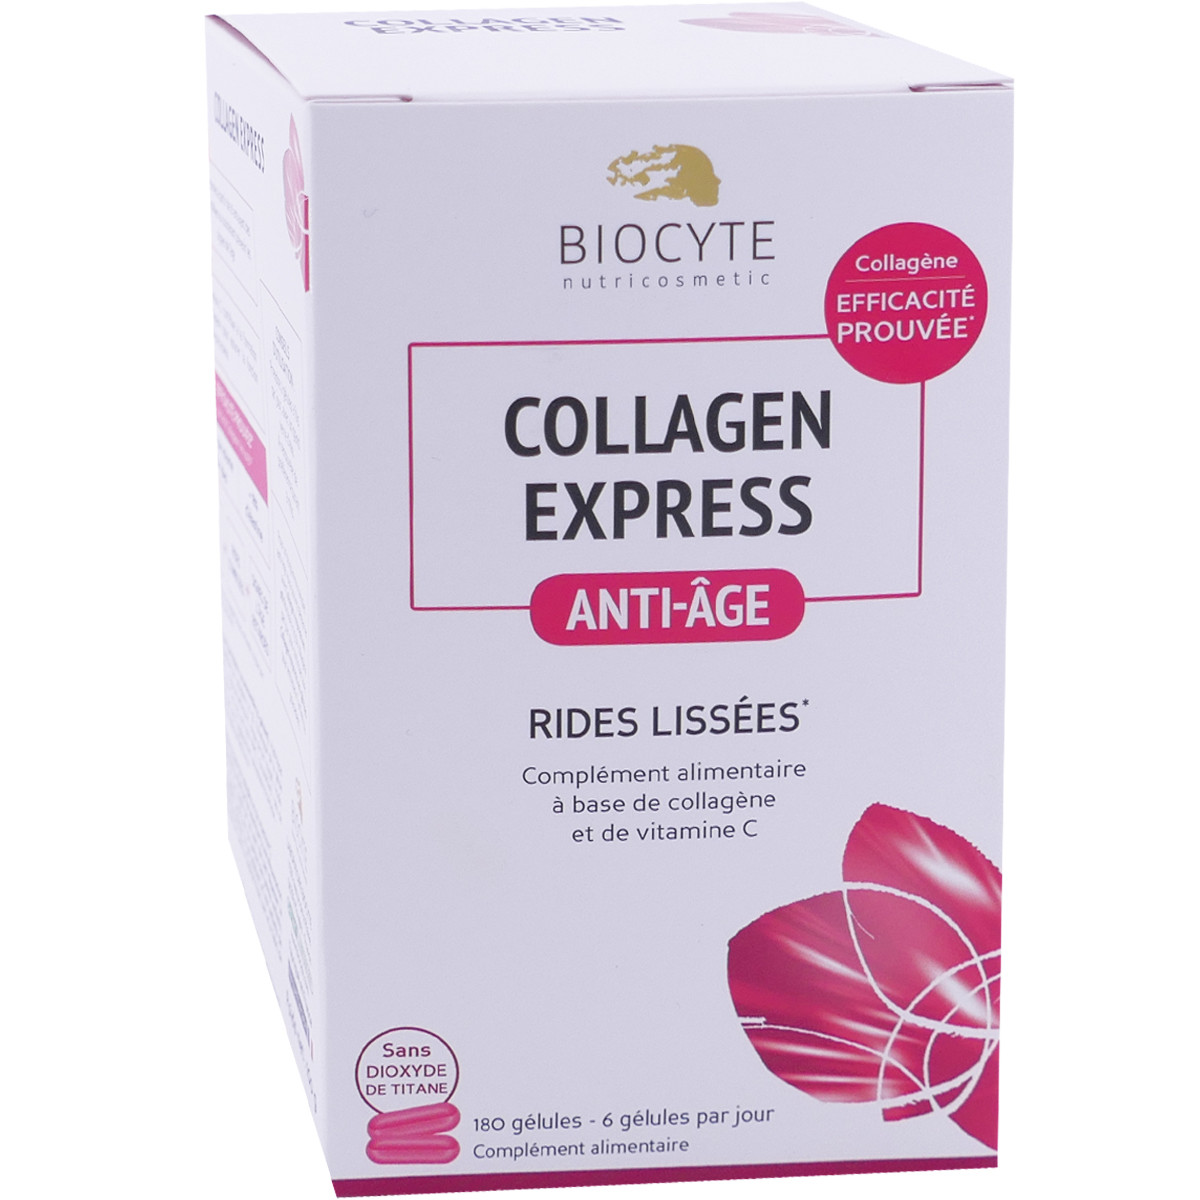 Коллаген купить в аптеке спб. Biocyte Collagen Express Anti-age. Анти эйдж коллаген. Коллаген экспресс анти-эйдж. Французский коллаген.